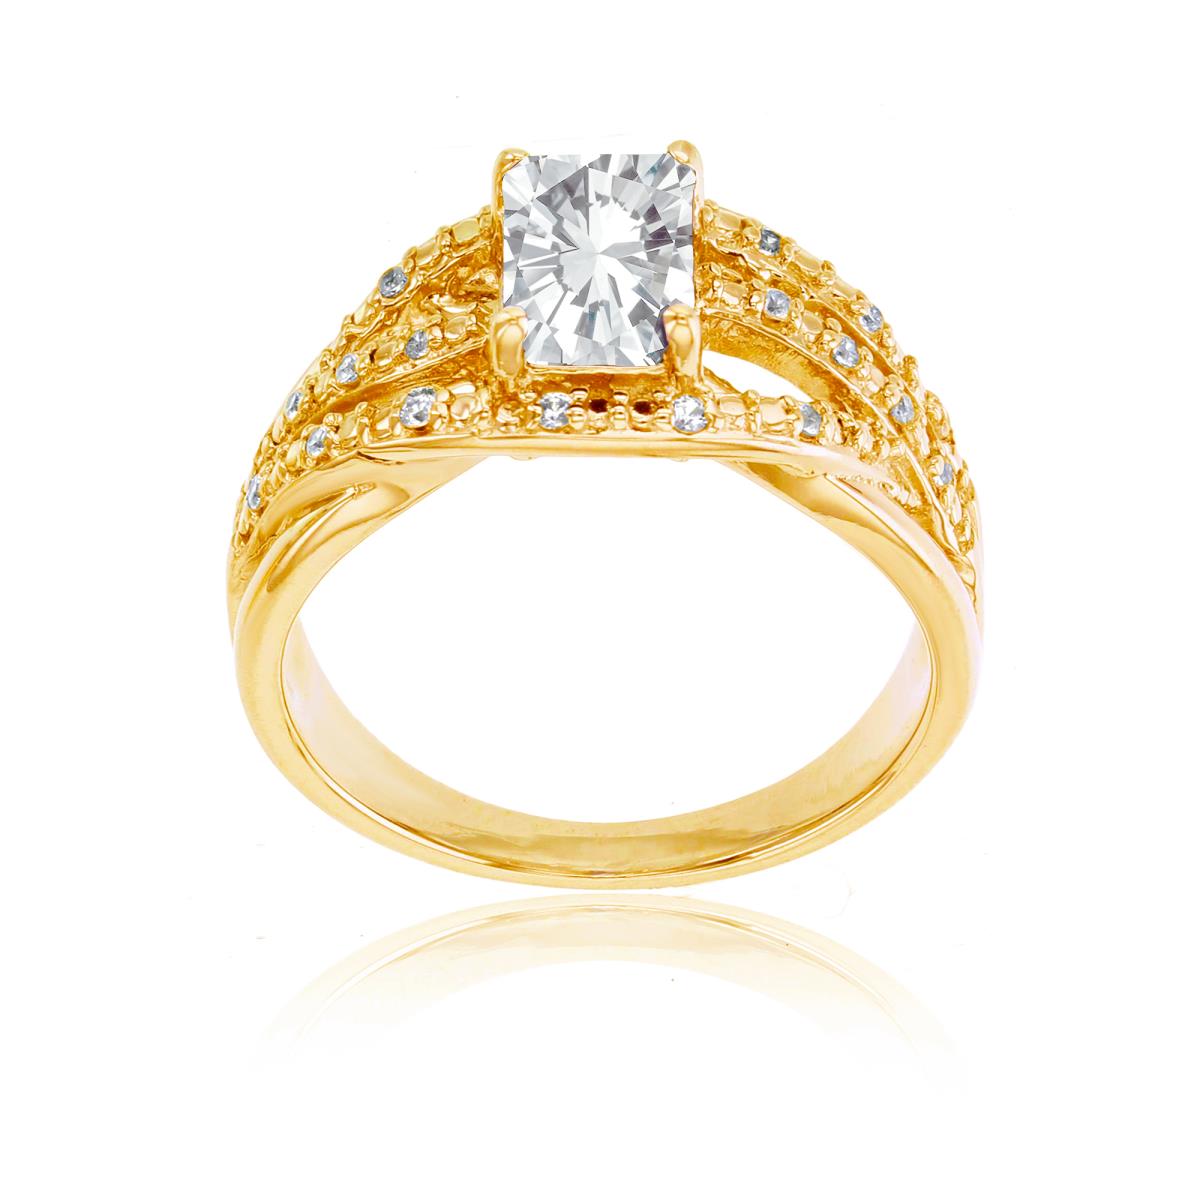 10K Yellow Gold 0.10 CTTW Rnd Diamond & 7x5mm Oct White Topaz Ring